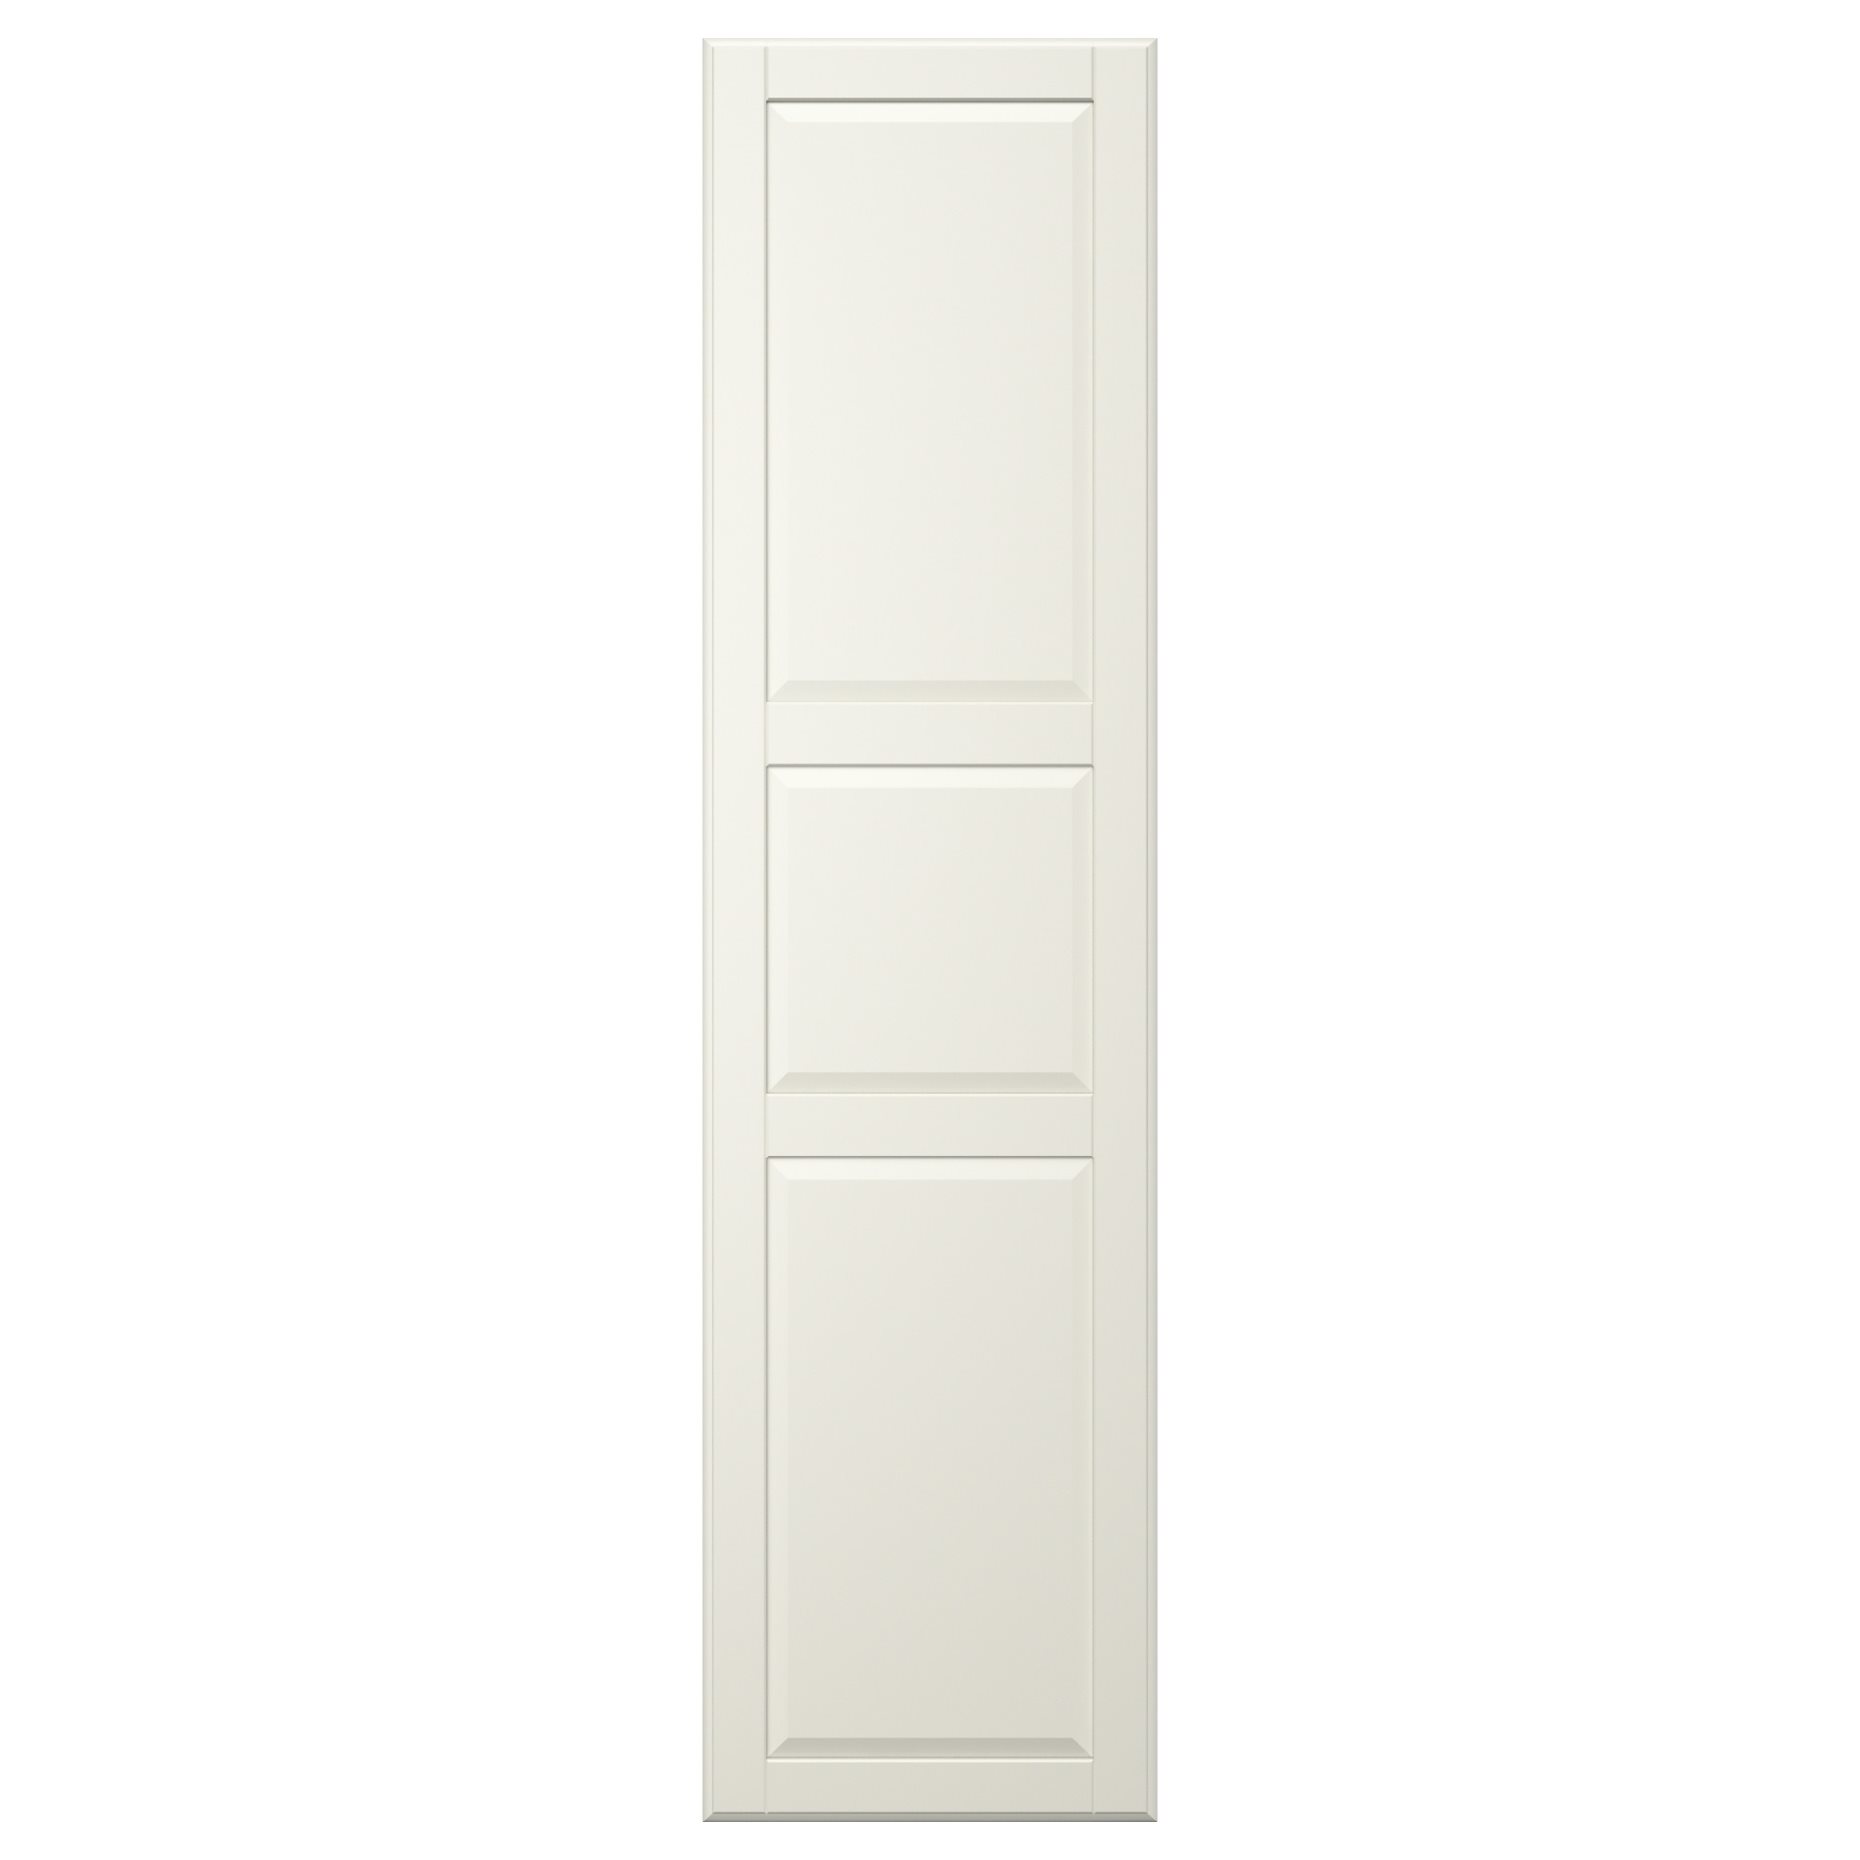 TYSSEDAL, door with hinges, 50x195 cm, 390.902.50